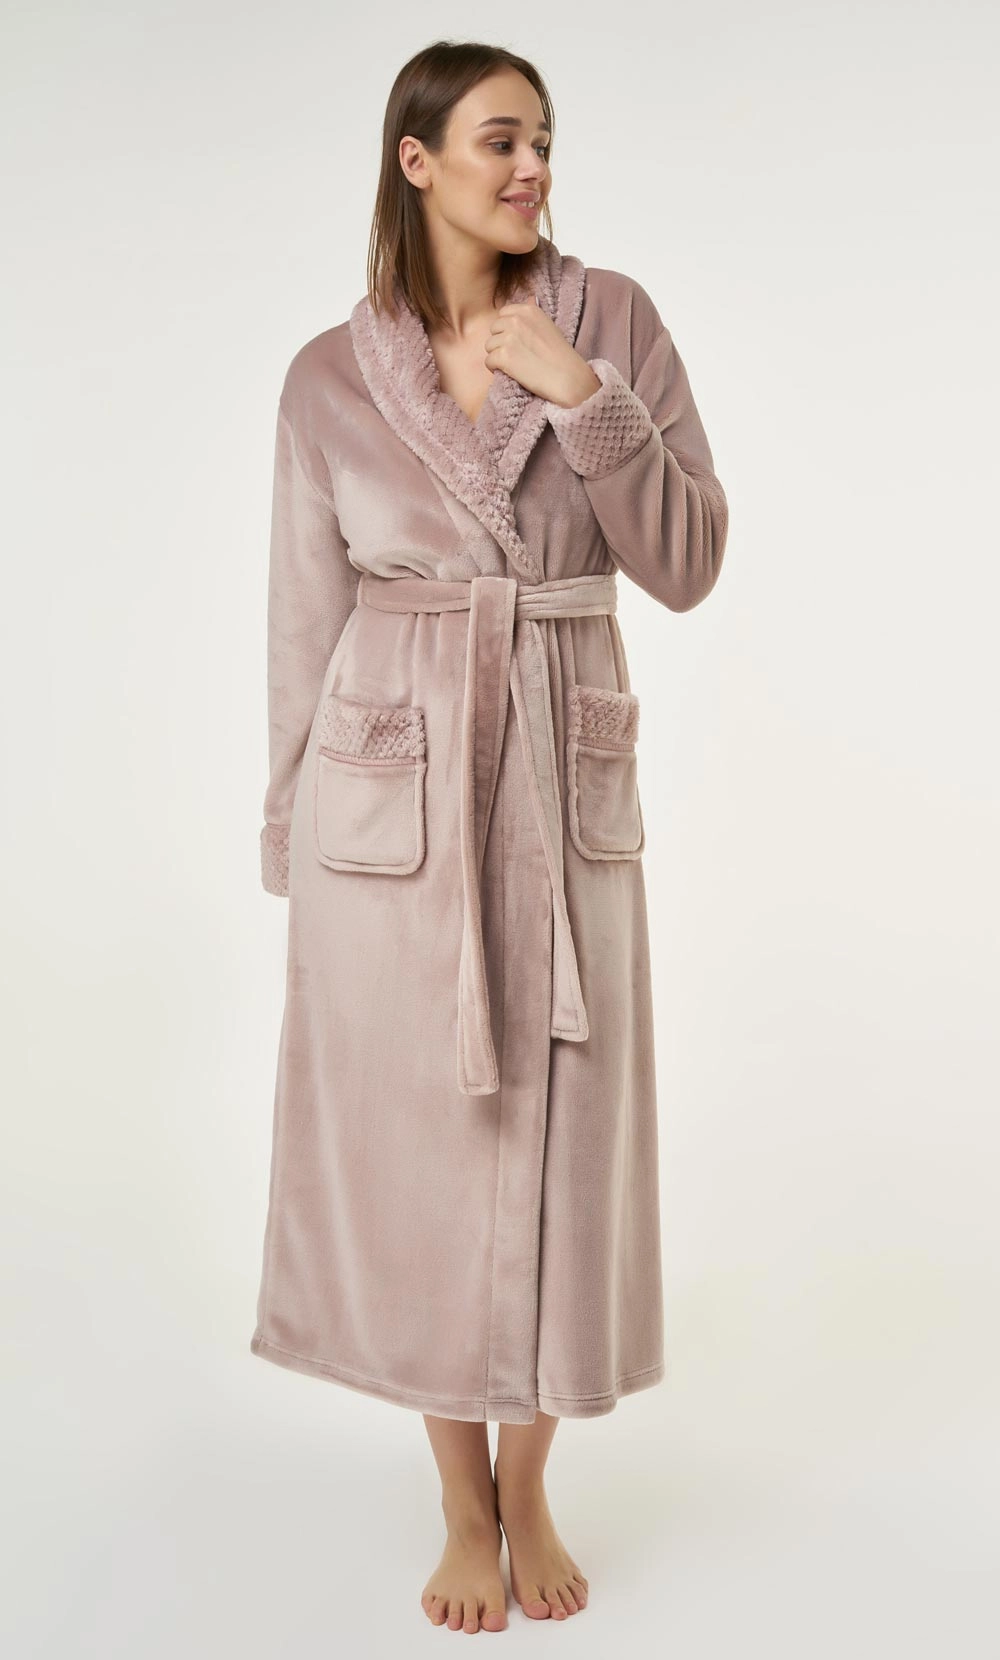 Blush Pink Plush Soft Warm Fleece Womens Robe-Robemart.com